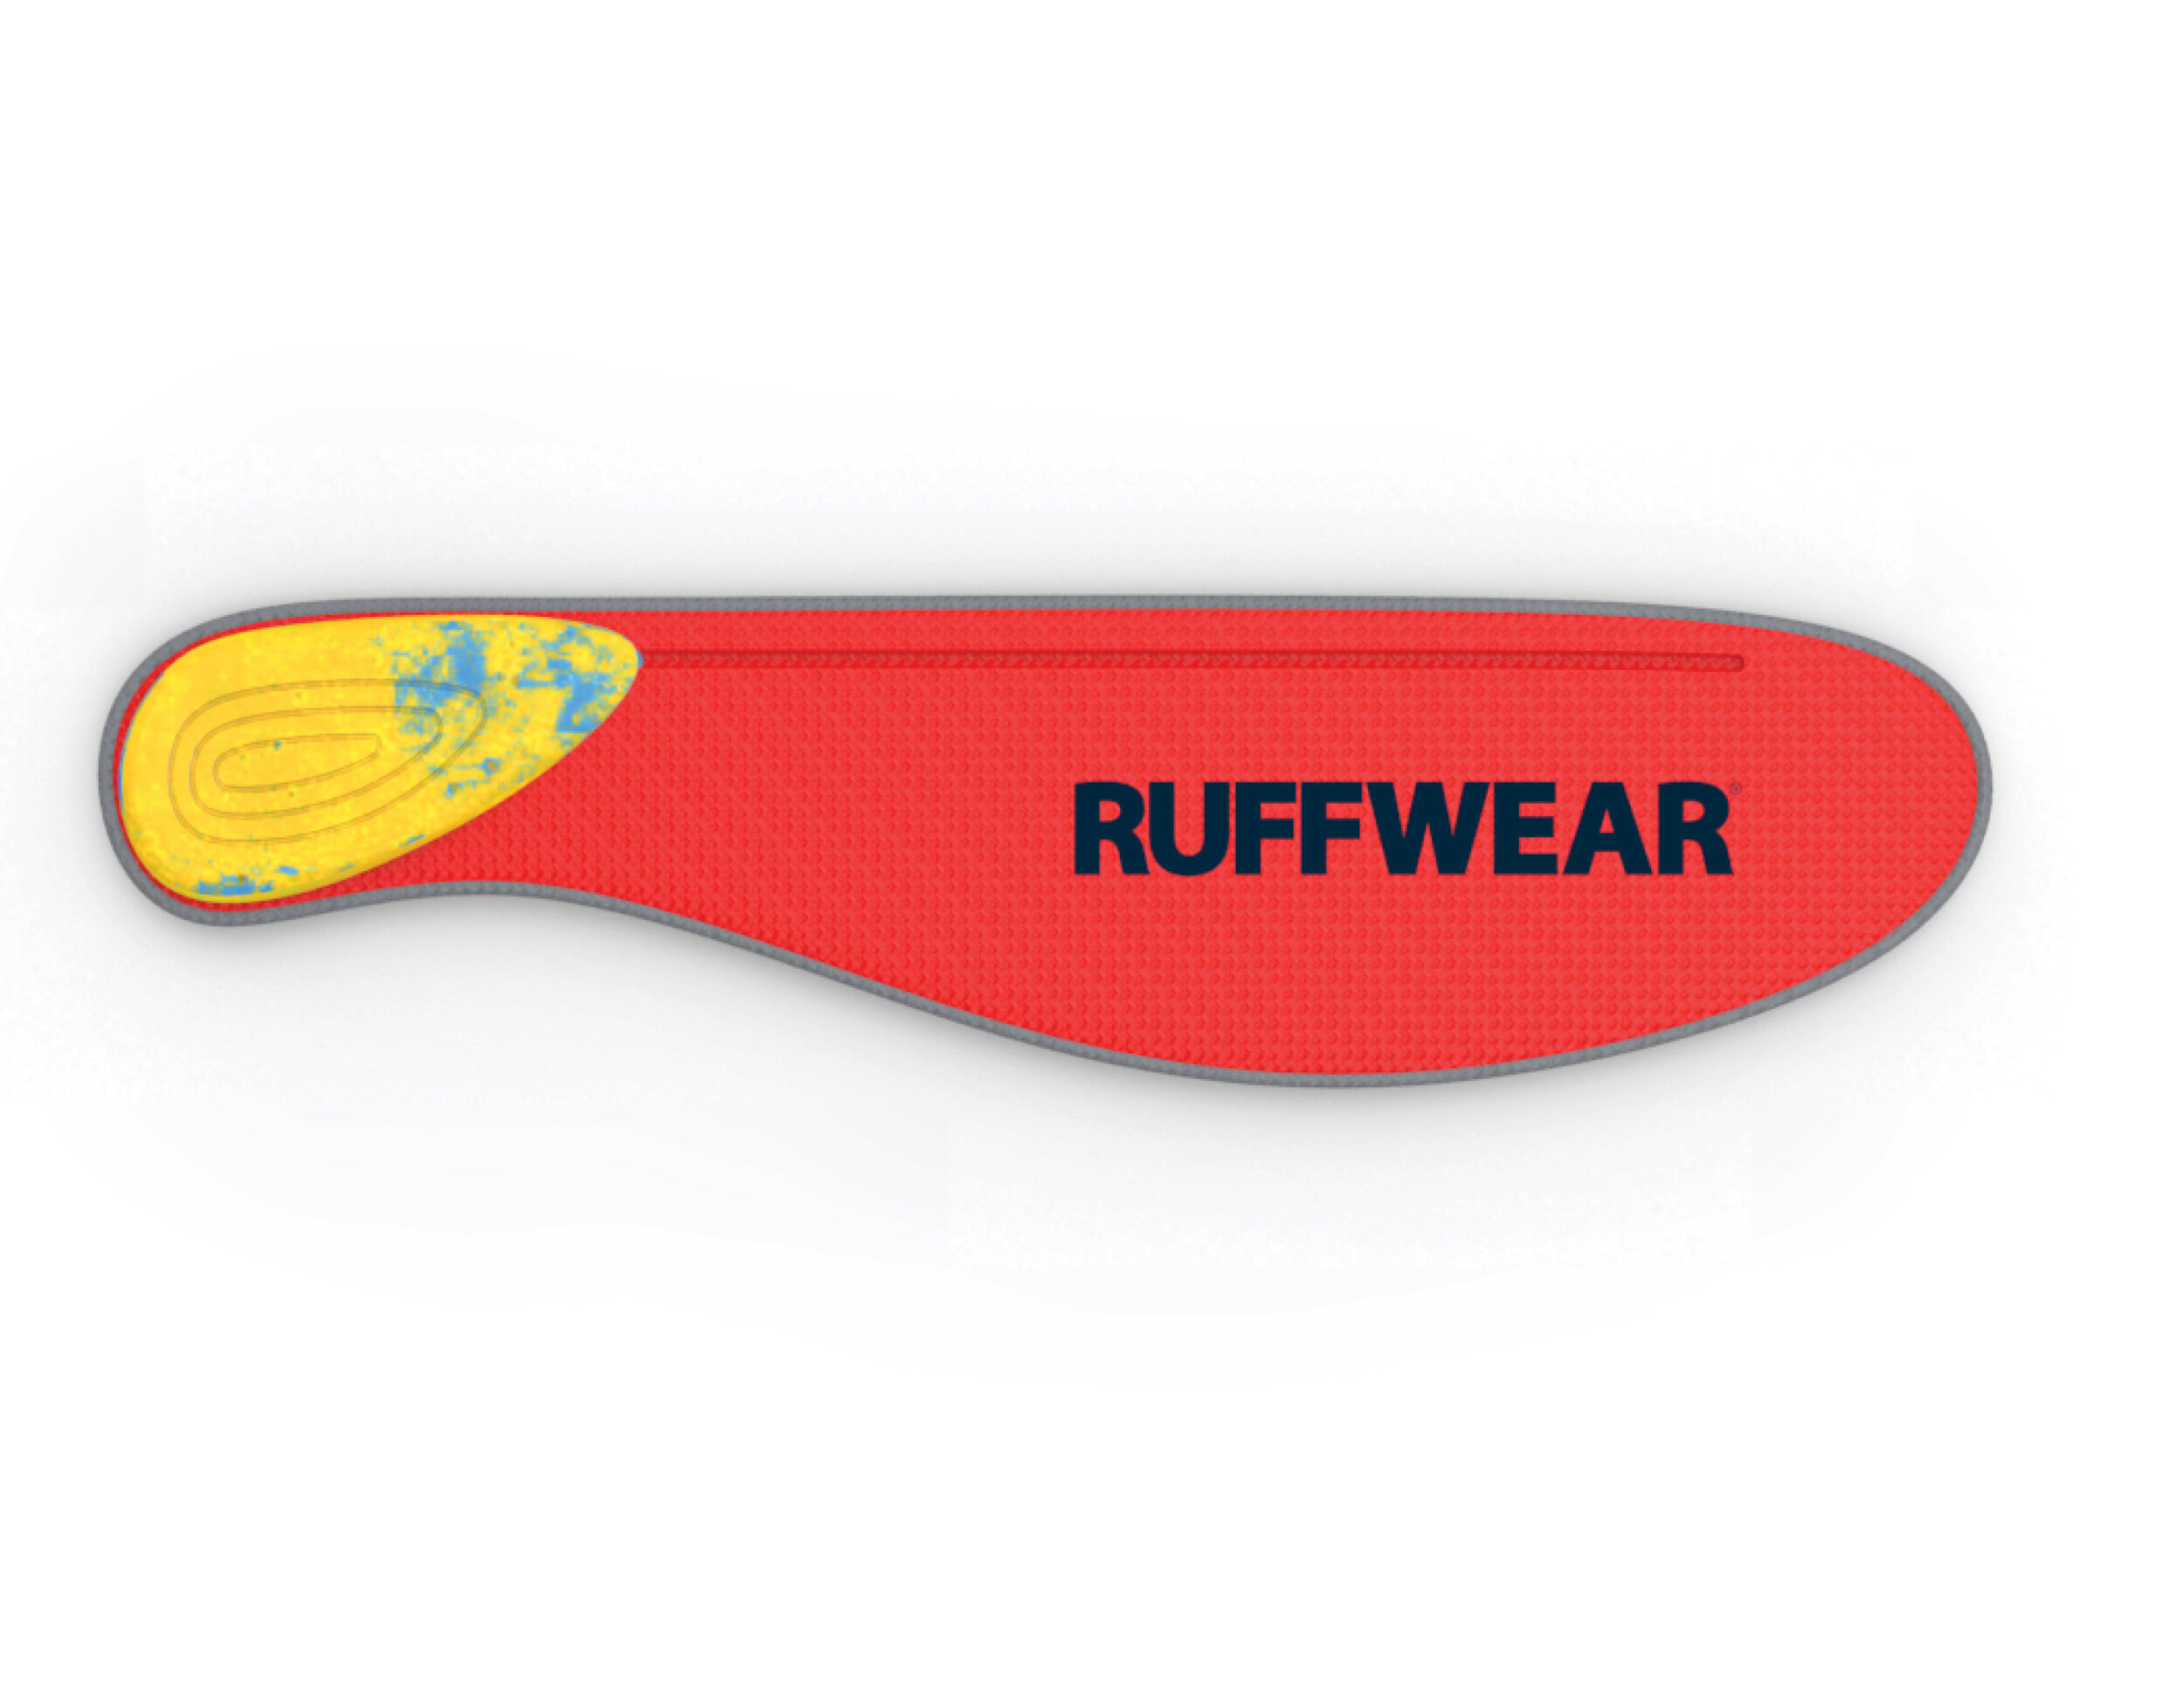 Ruffwear Toy Concepts 07.01.1516.jpg